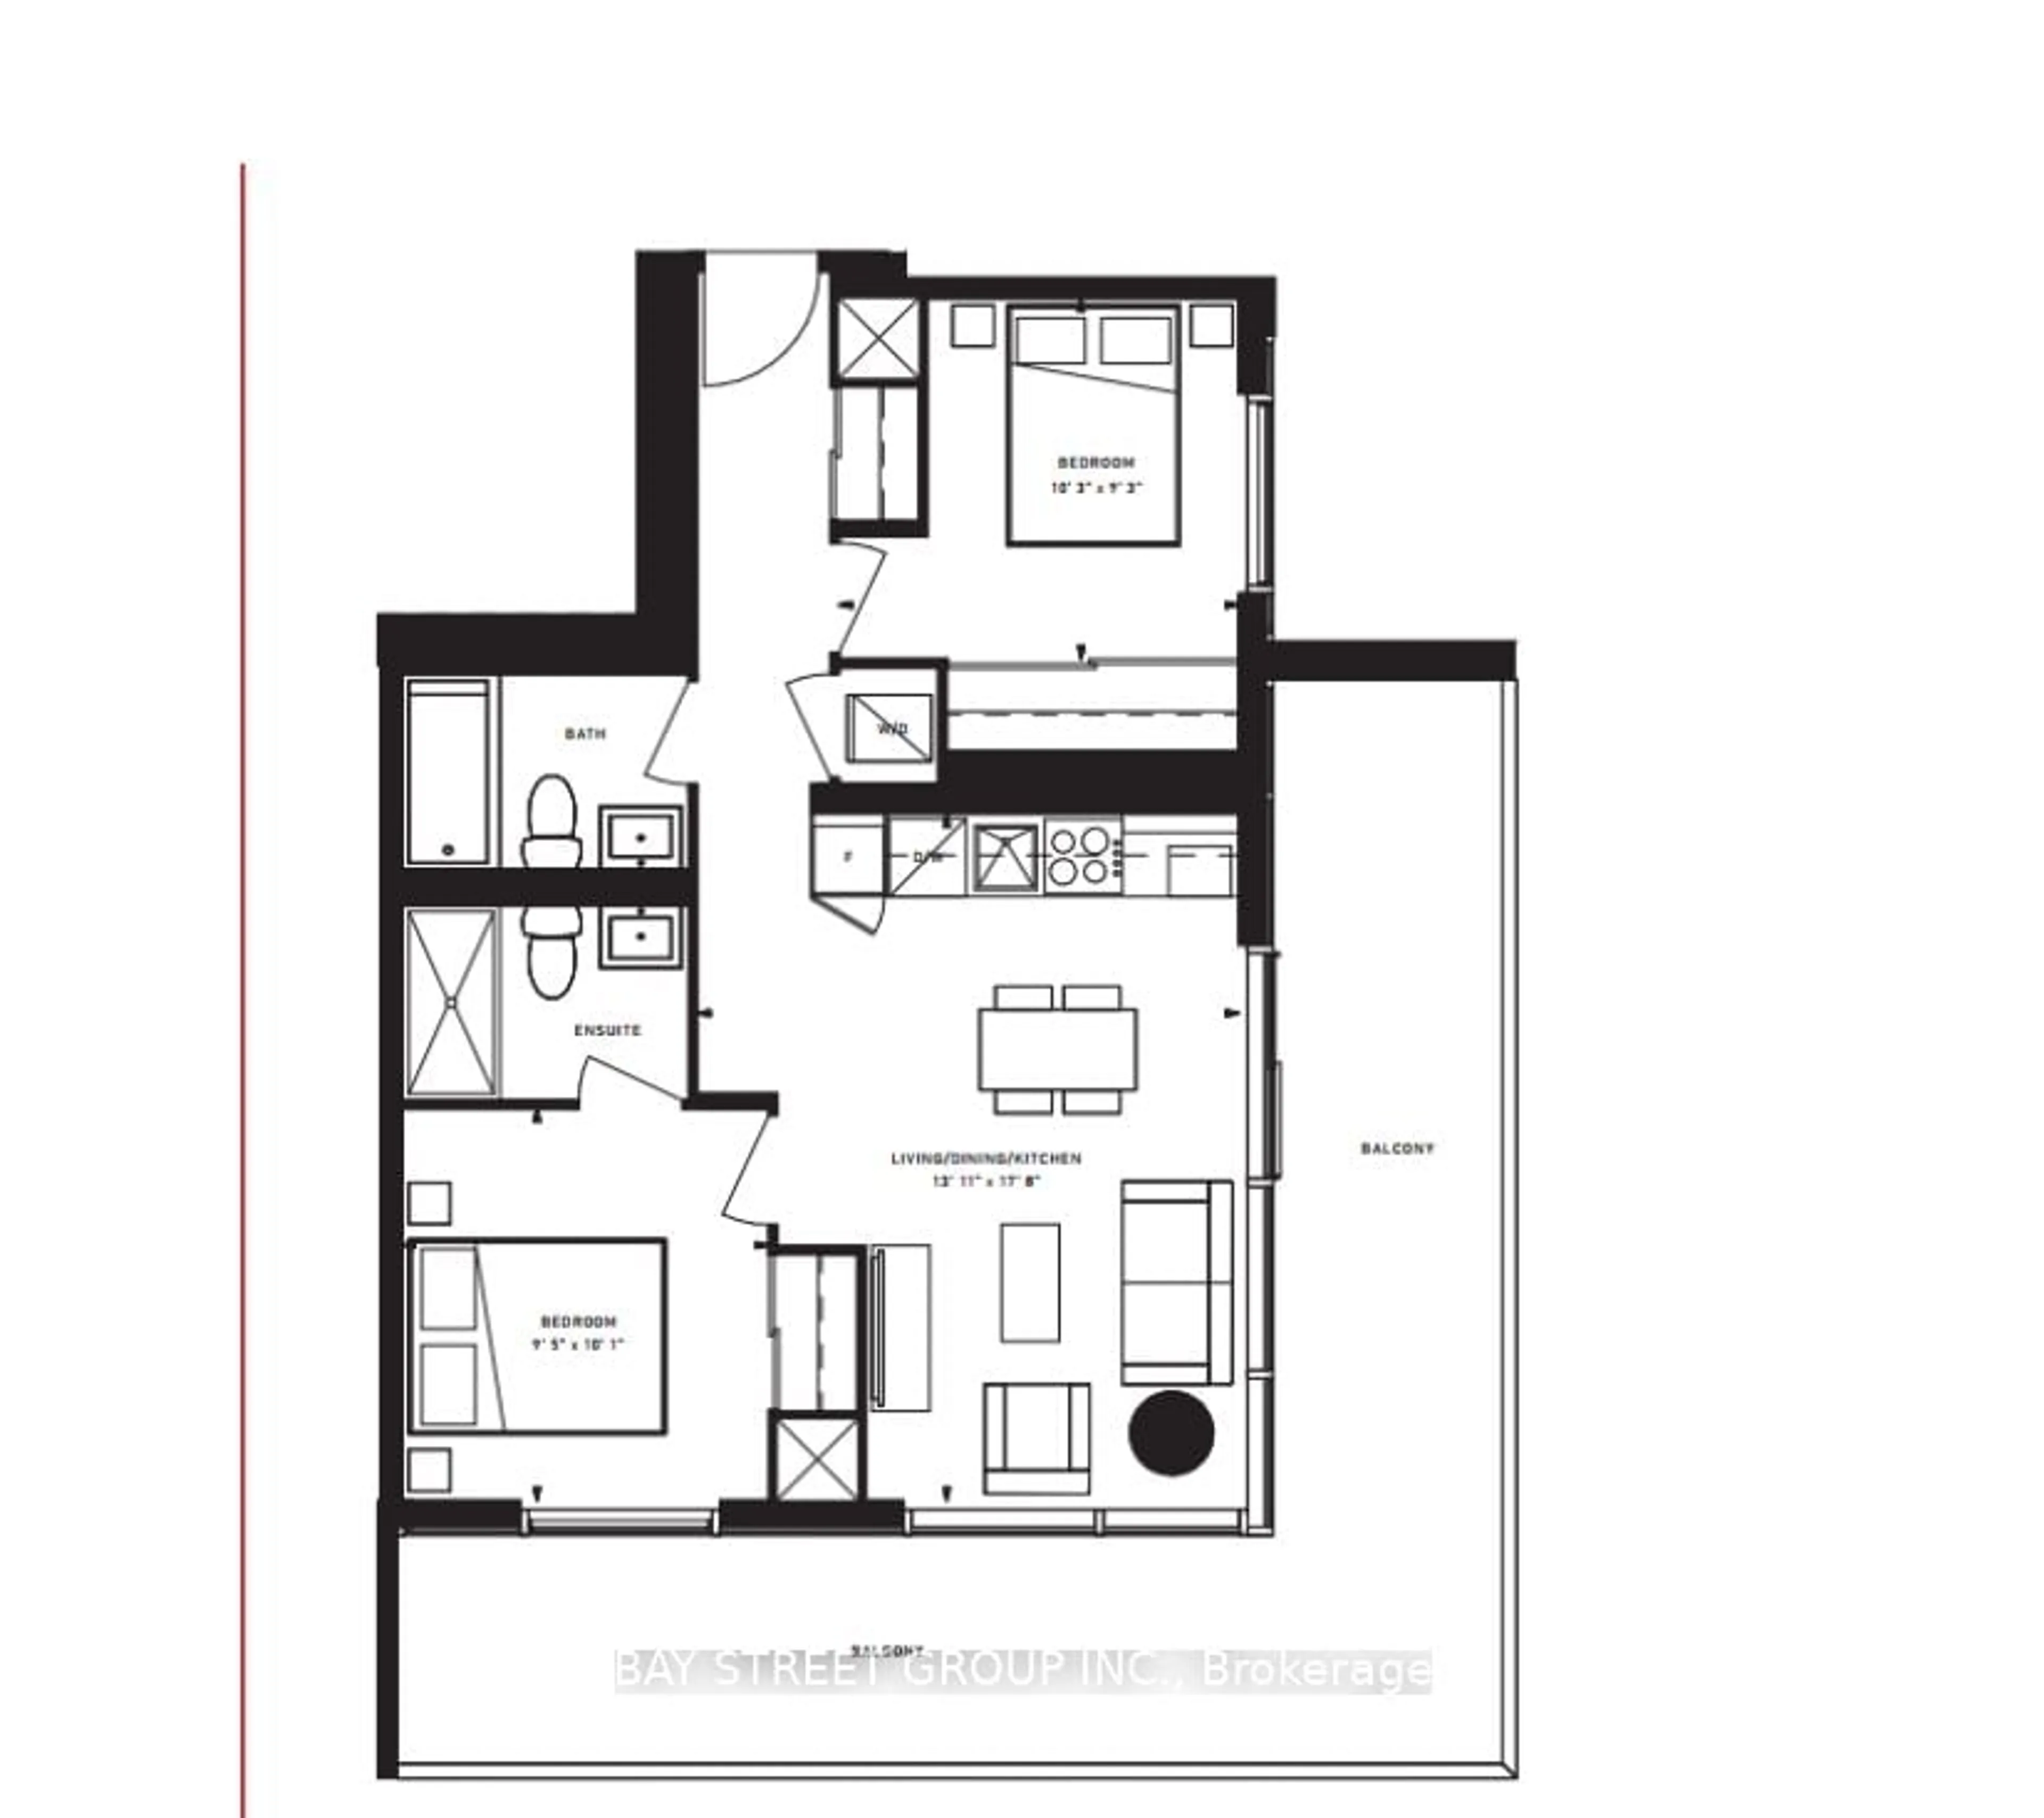 Floor plan for 7890 Jane St #5512, Vaughan Ontario L4K 0K9